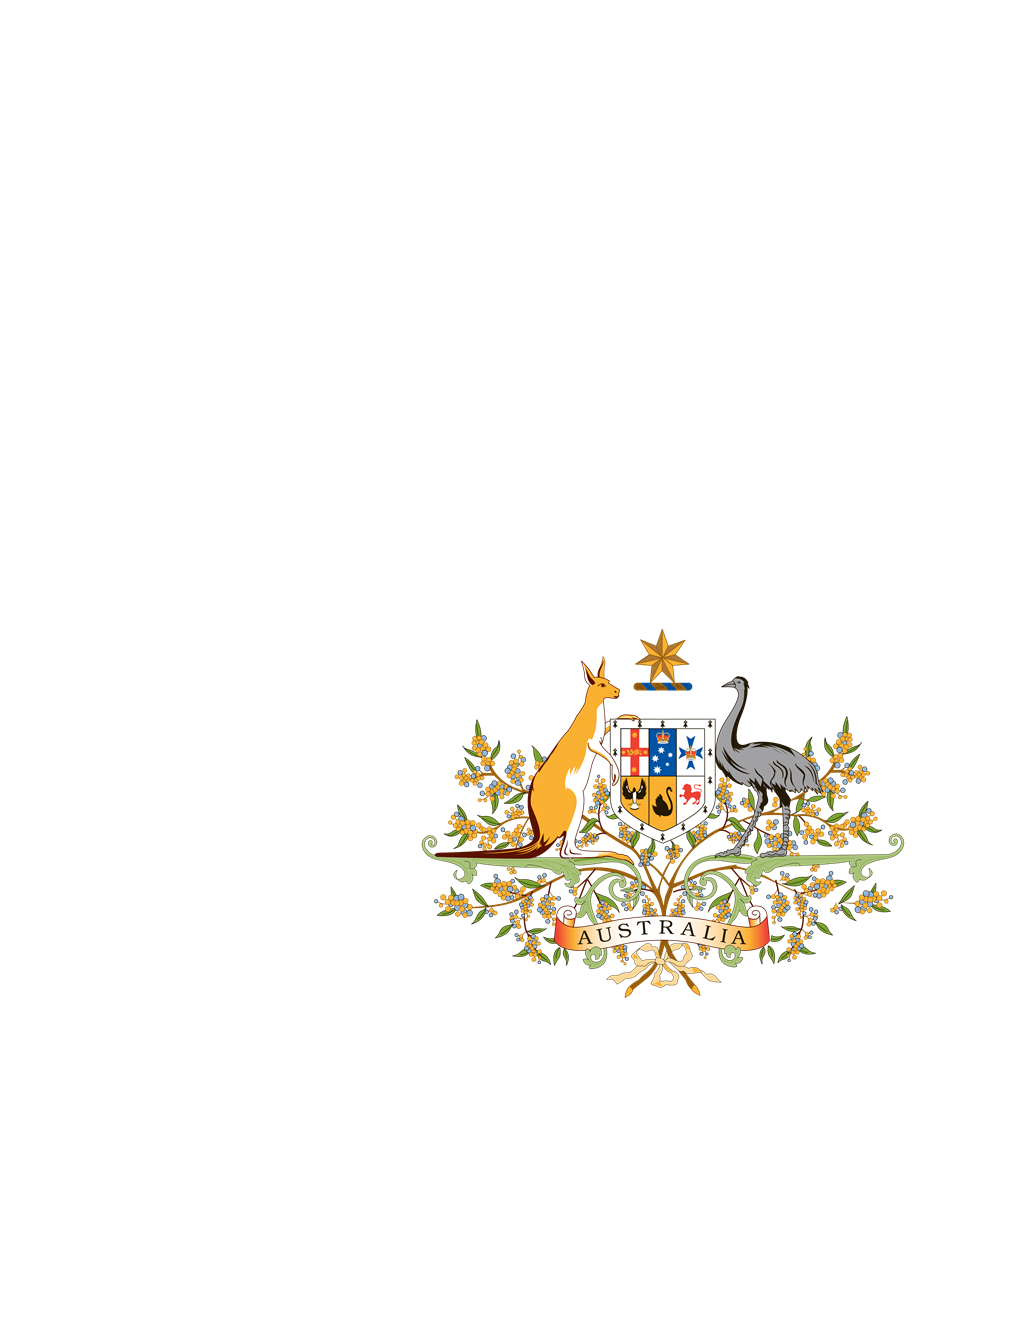 Australia logotype, transparent .png, medium, large